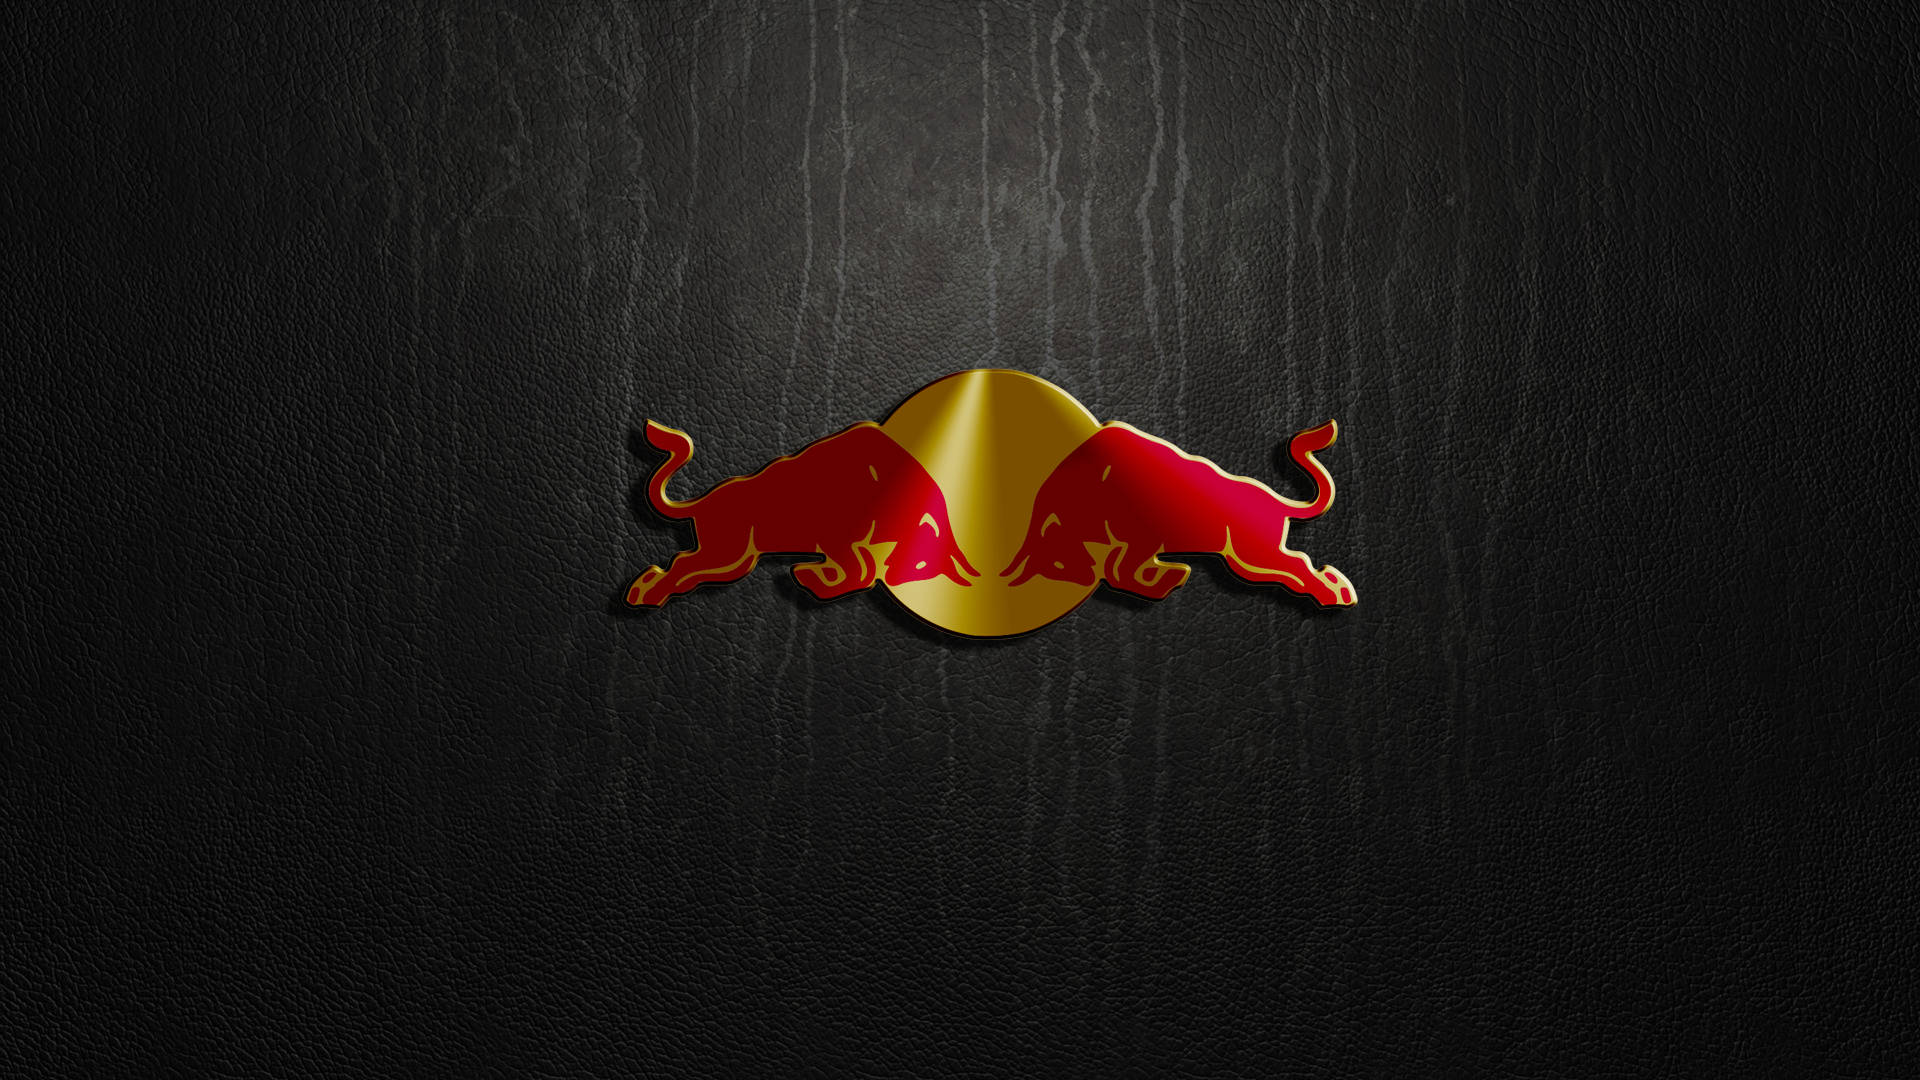 Red Bull F1 Background Wallpaper